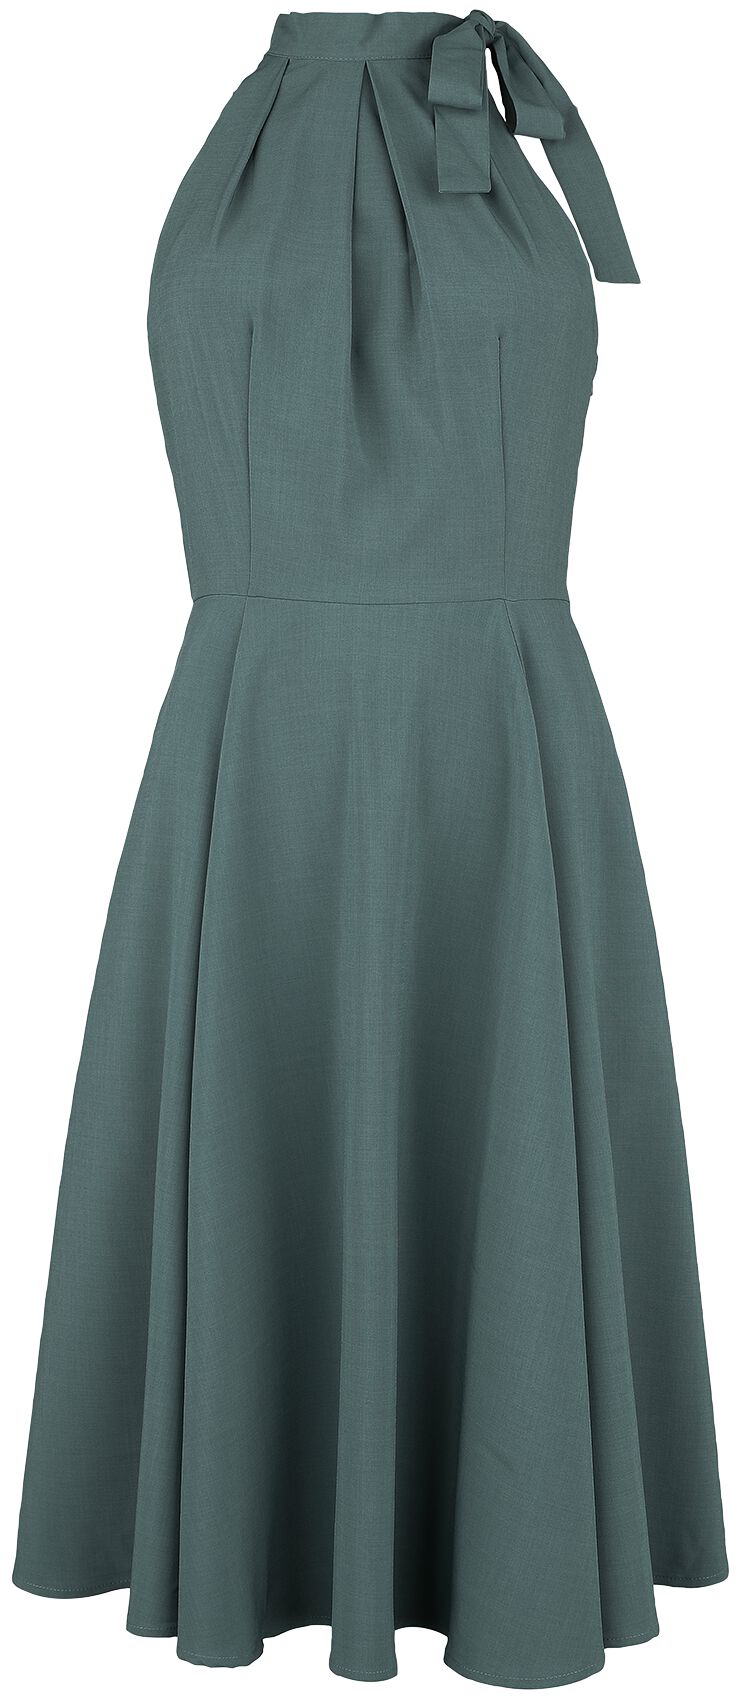 H&R London - Rockabilly Kleid knielang - Kira Swing Dress - XS bis XXL - für Damen - Größe XS - grün